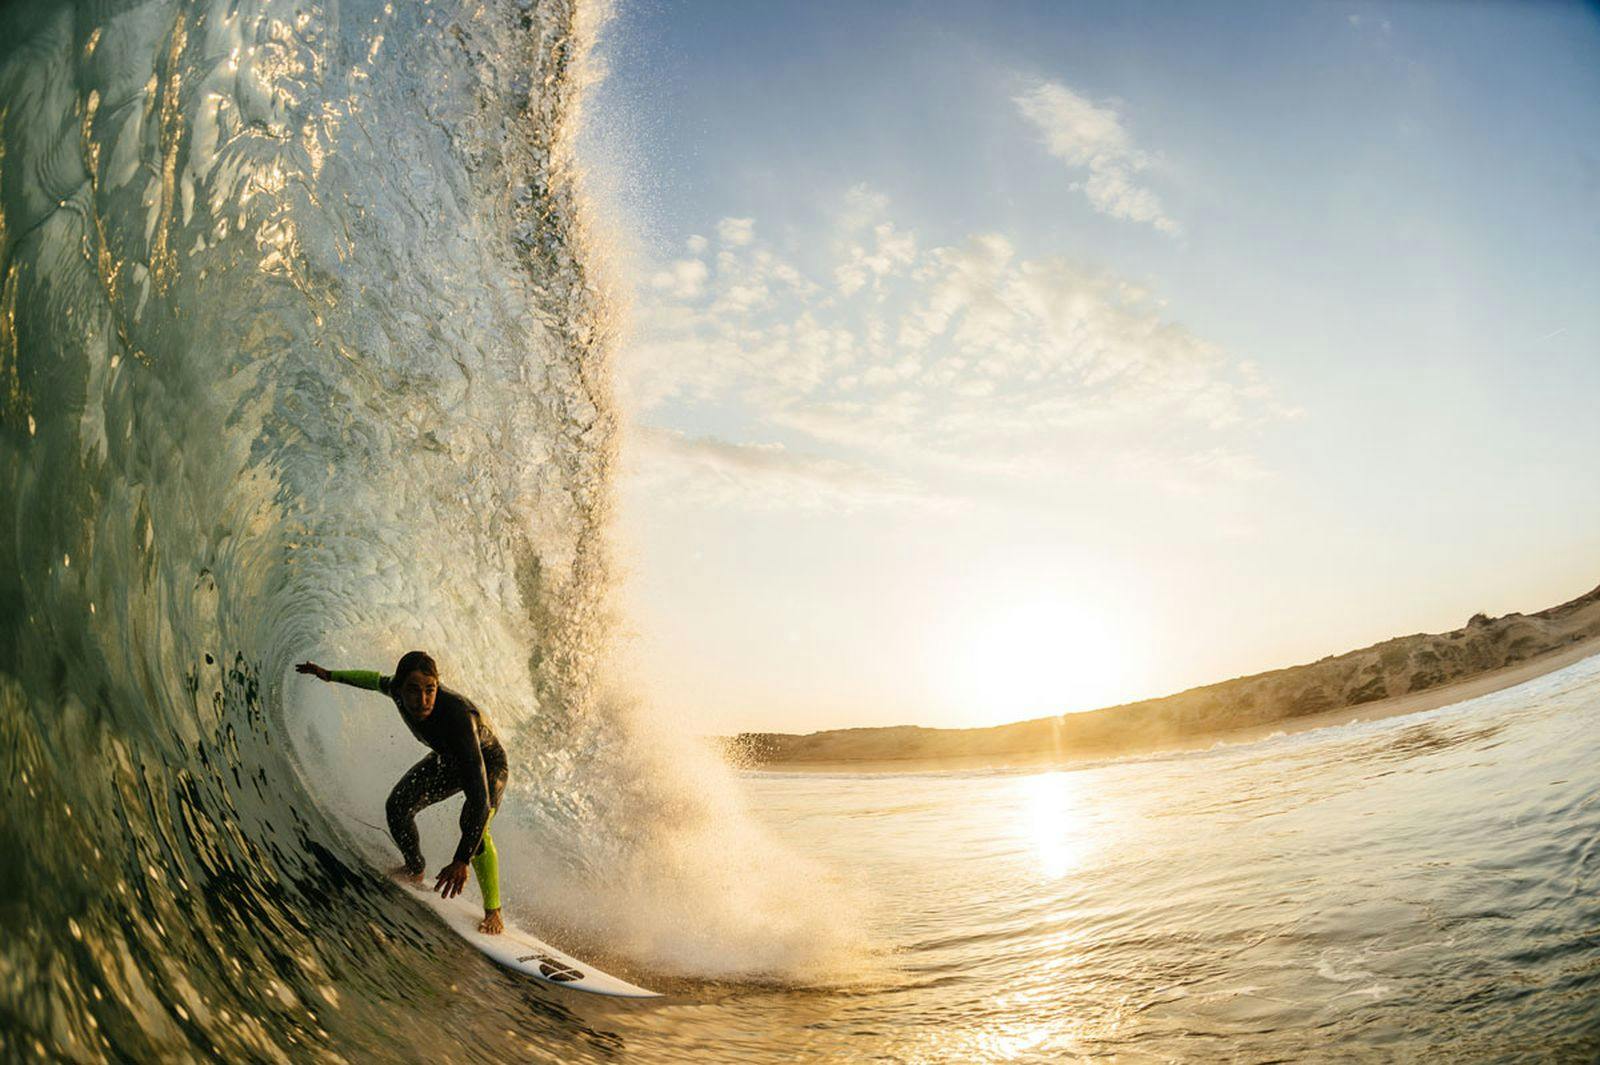 leren surfen: wipe out